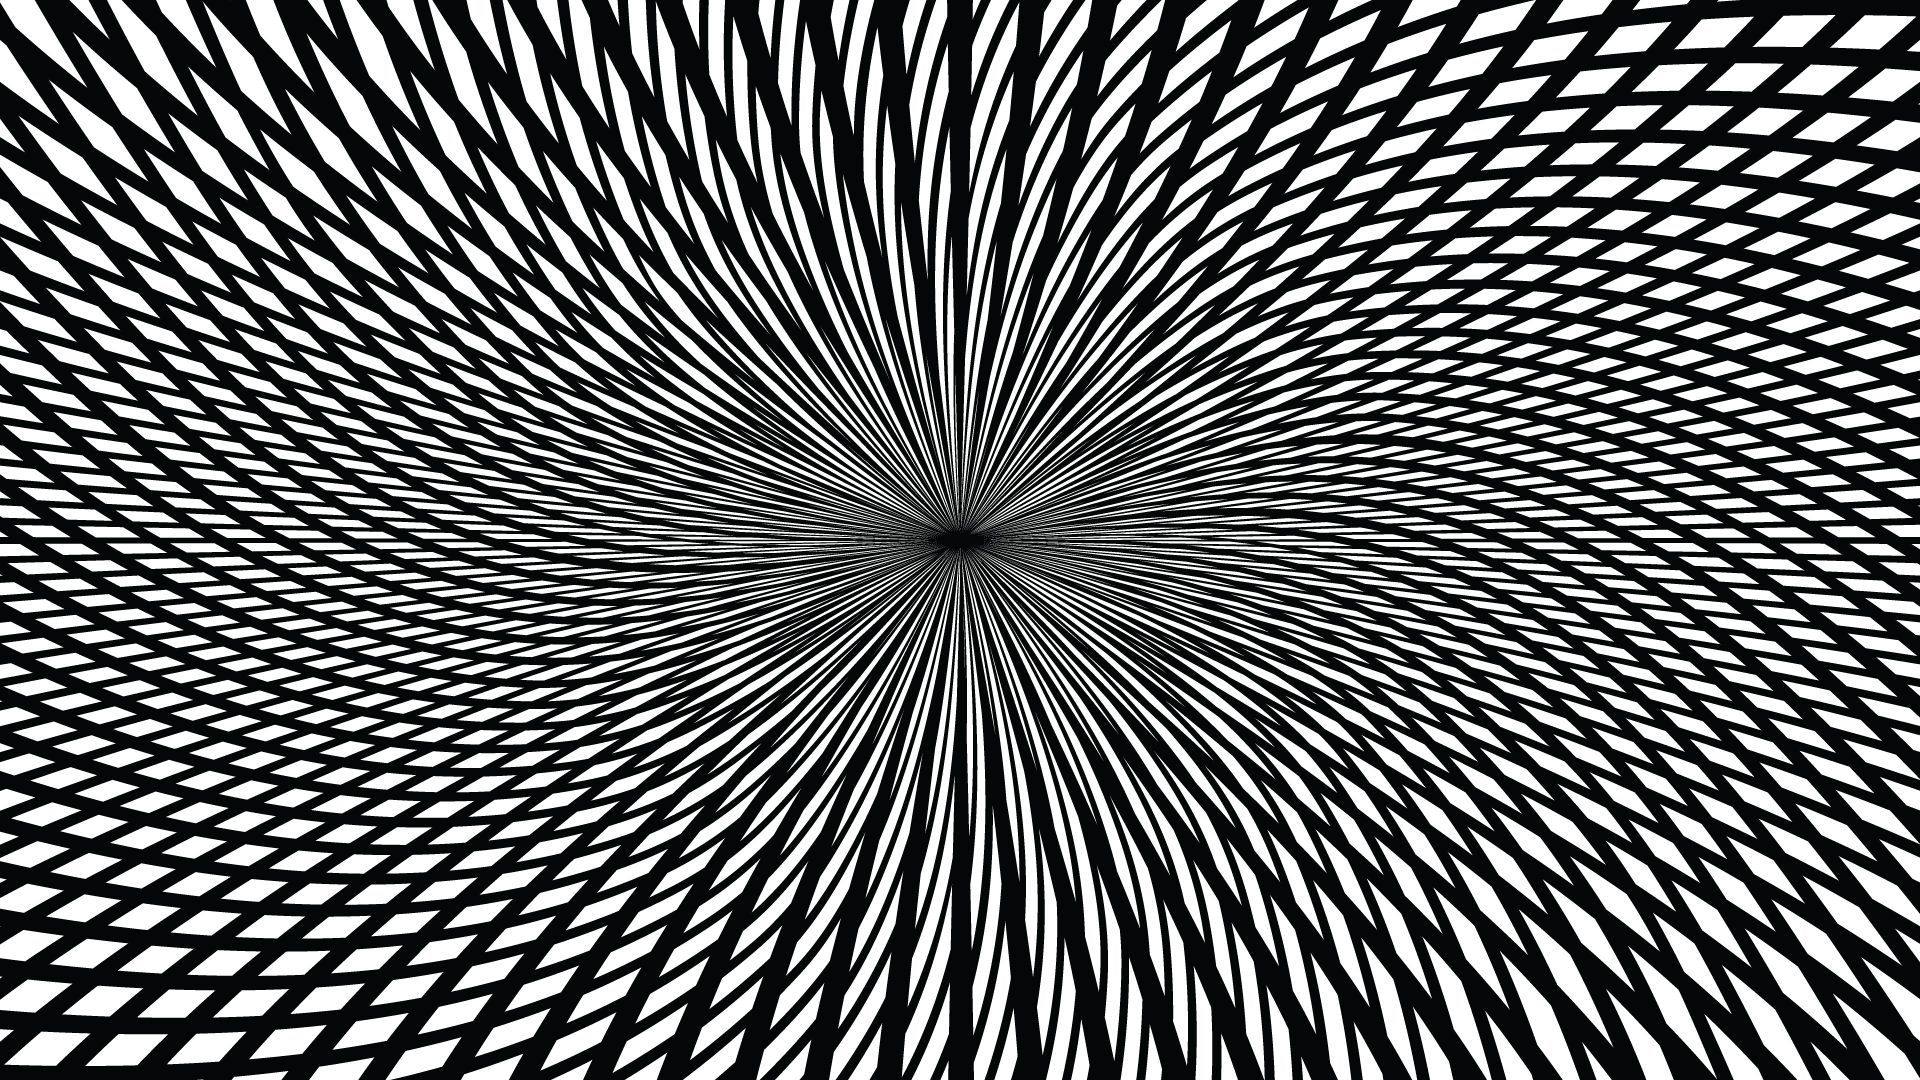 Intense black and white diamond pattern. Optical illusion